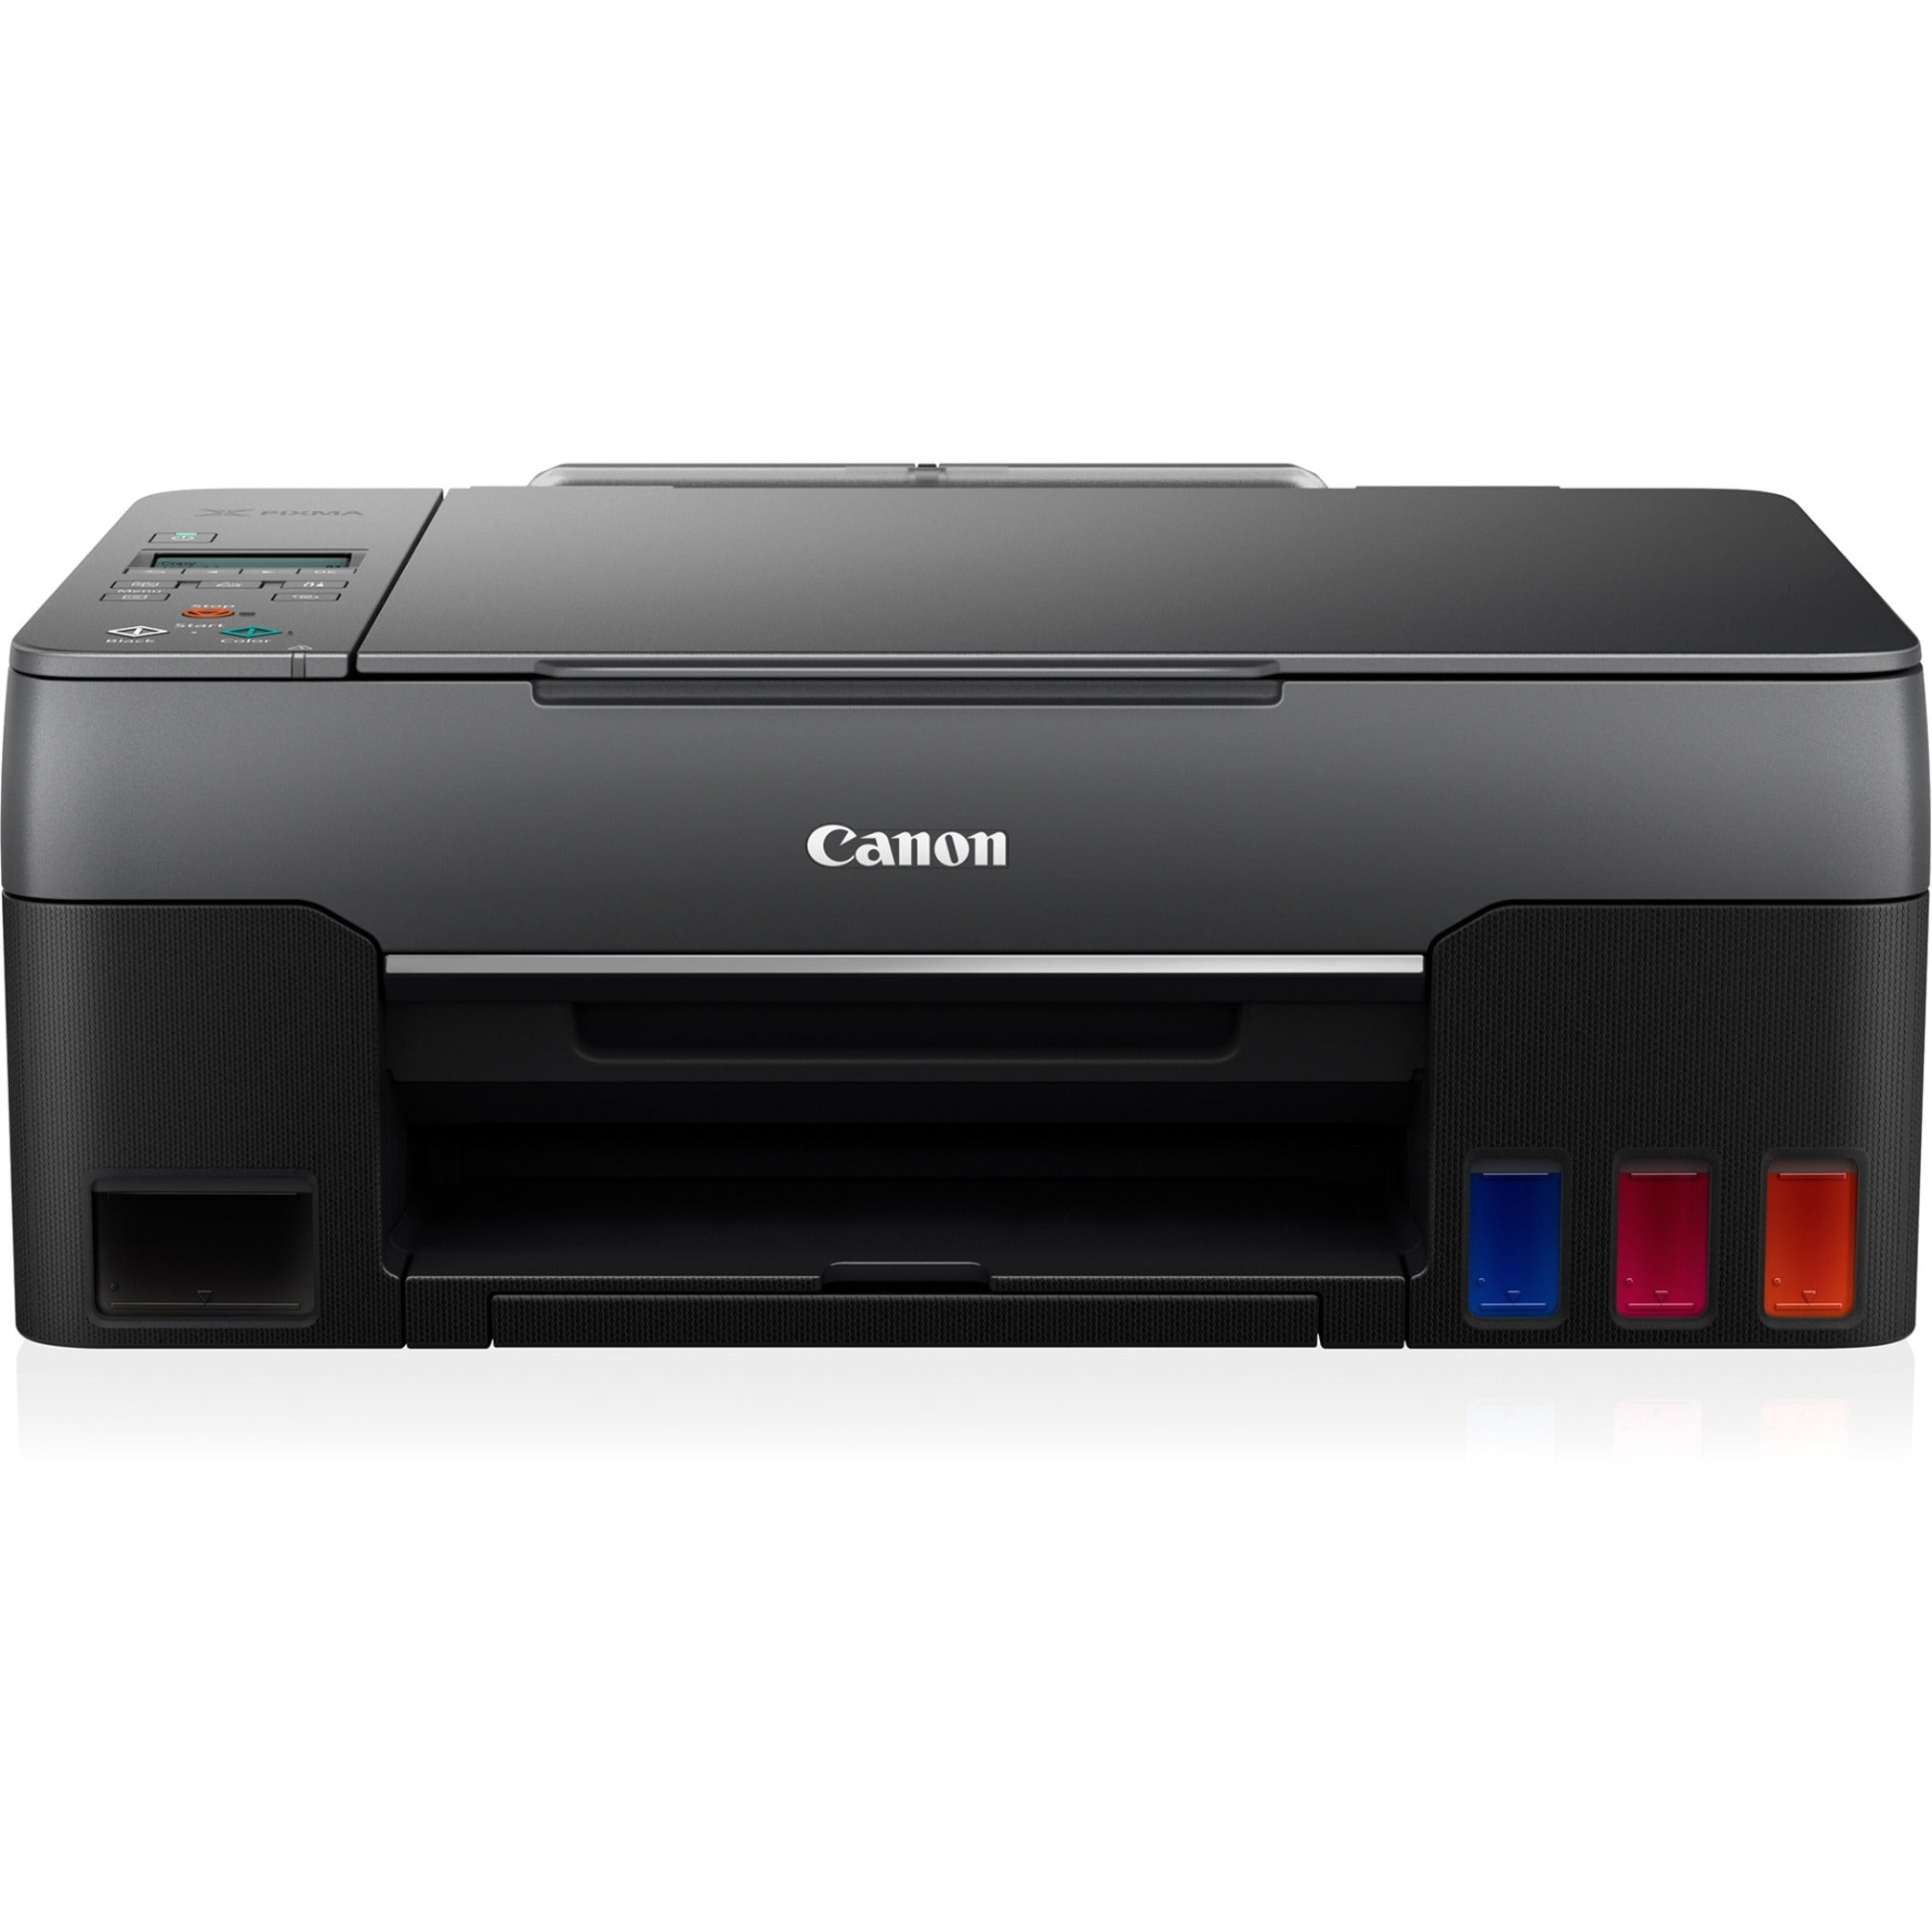 Canon 4468C002 PIXMA G3260 Wireless MegaTank All-in-One Printer, Color Printing, Wireless Connectivity